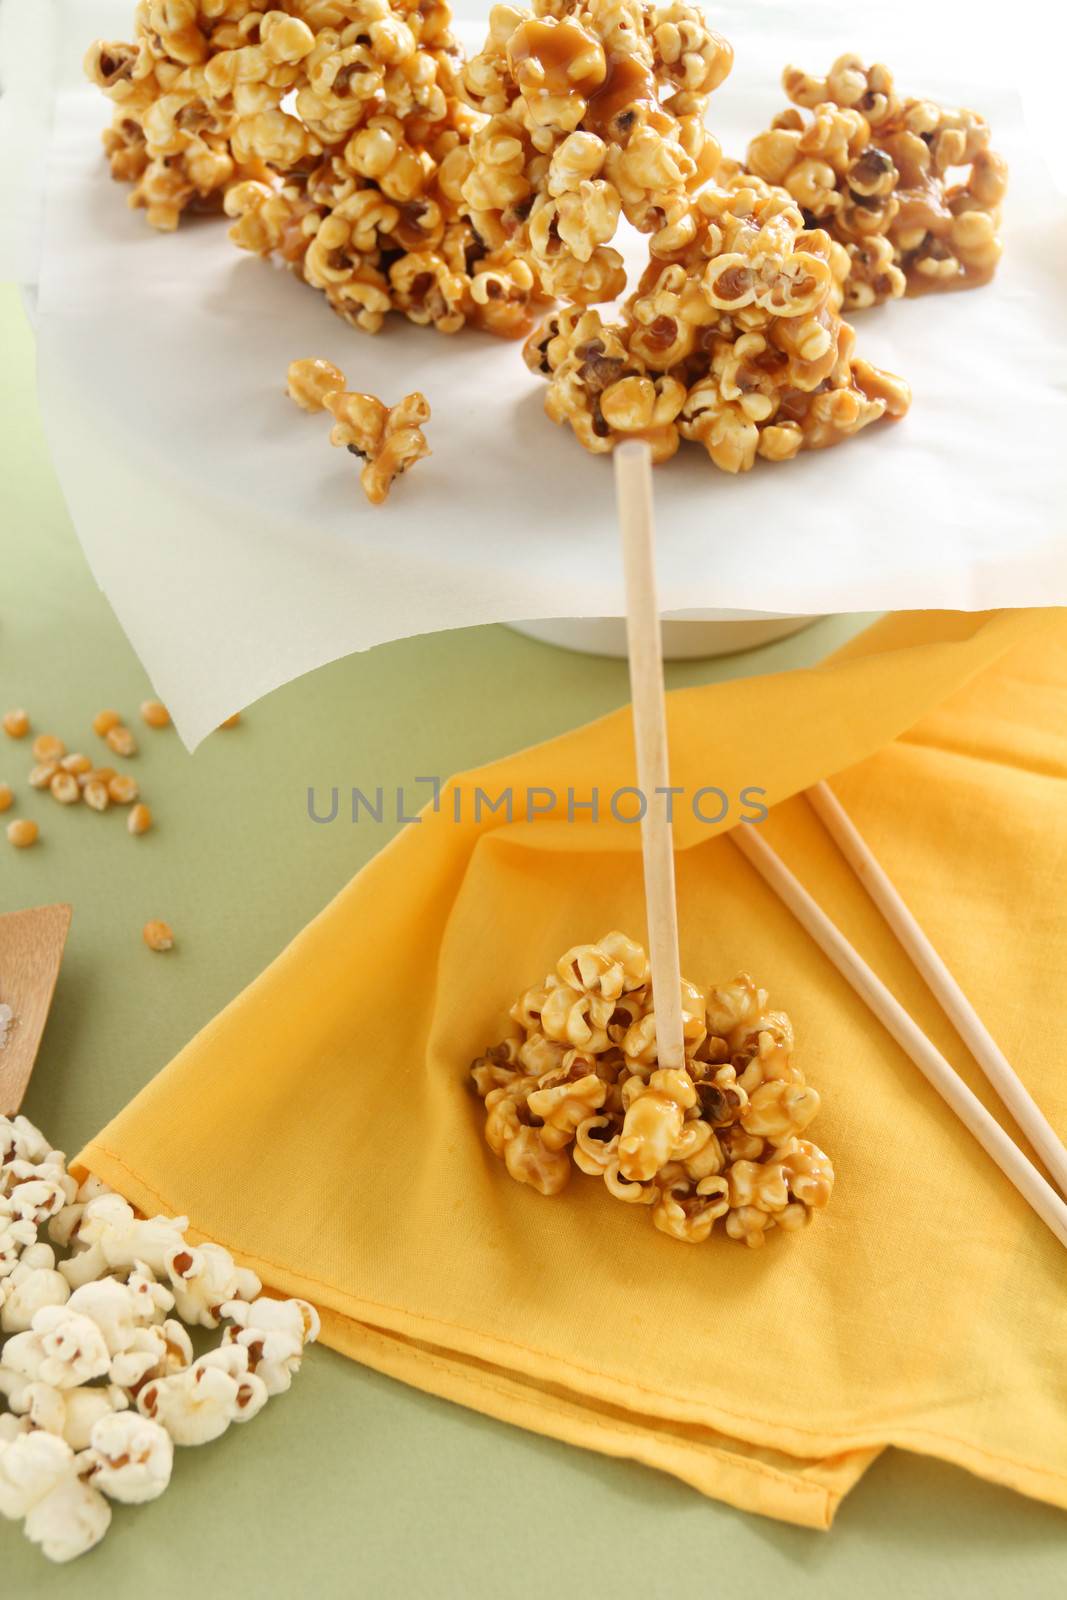 Caramel Popcorn by jabiru